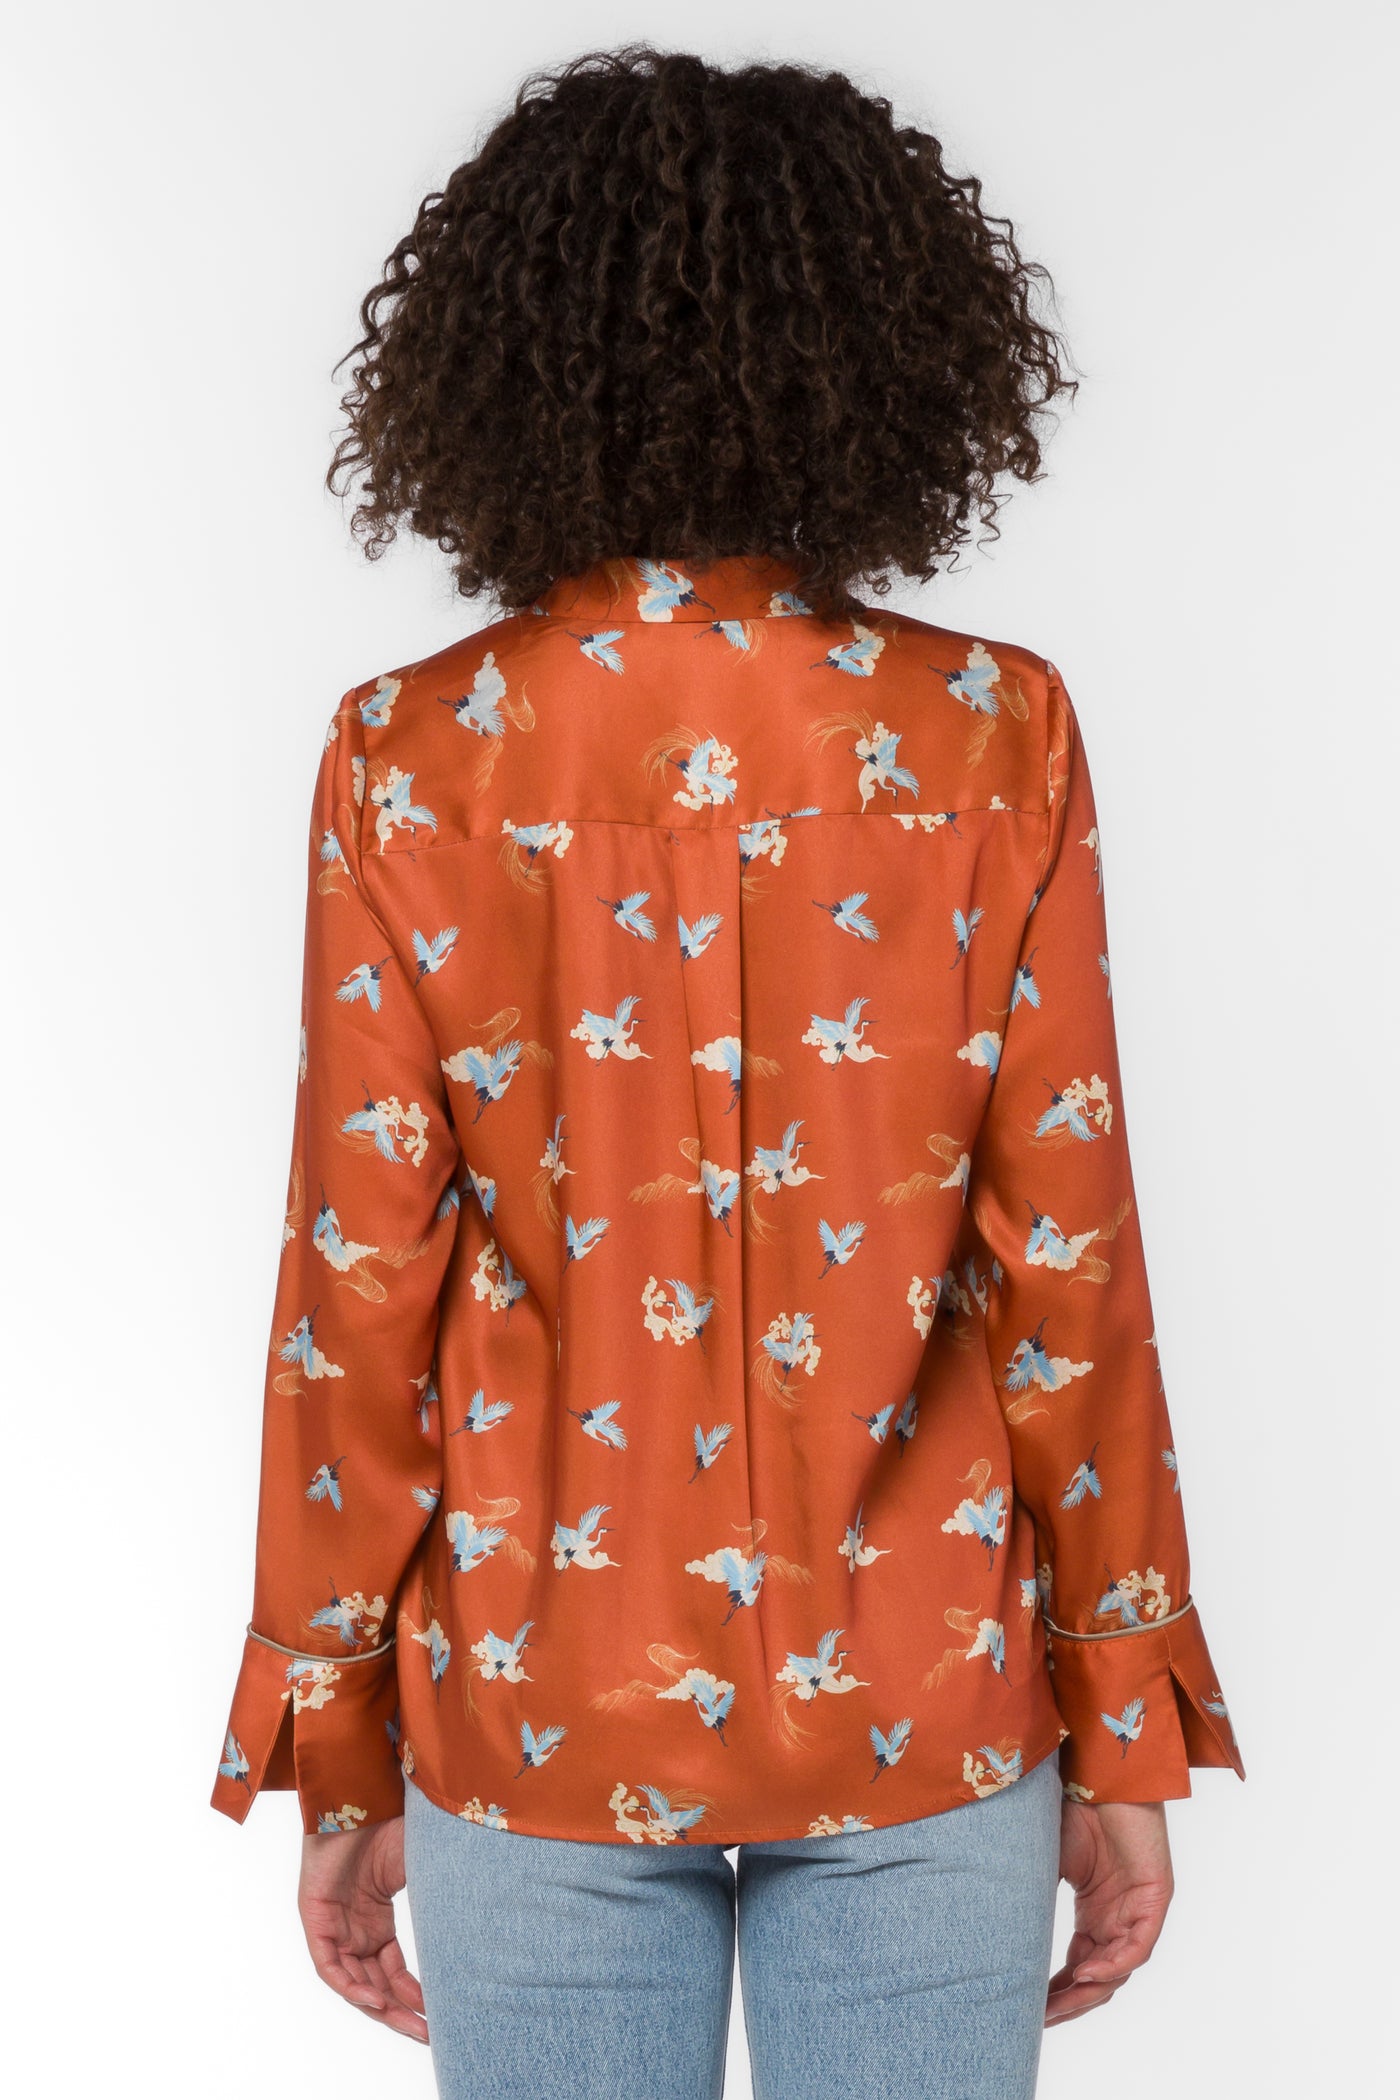 Liza Rust Cranes Shirt - Tops - Velvet Heart Clothing